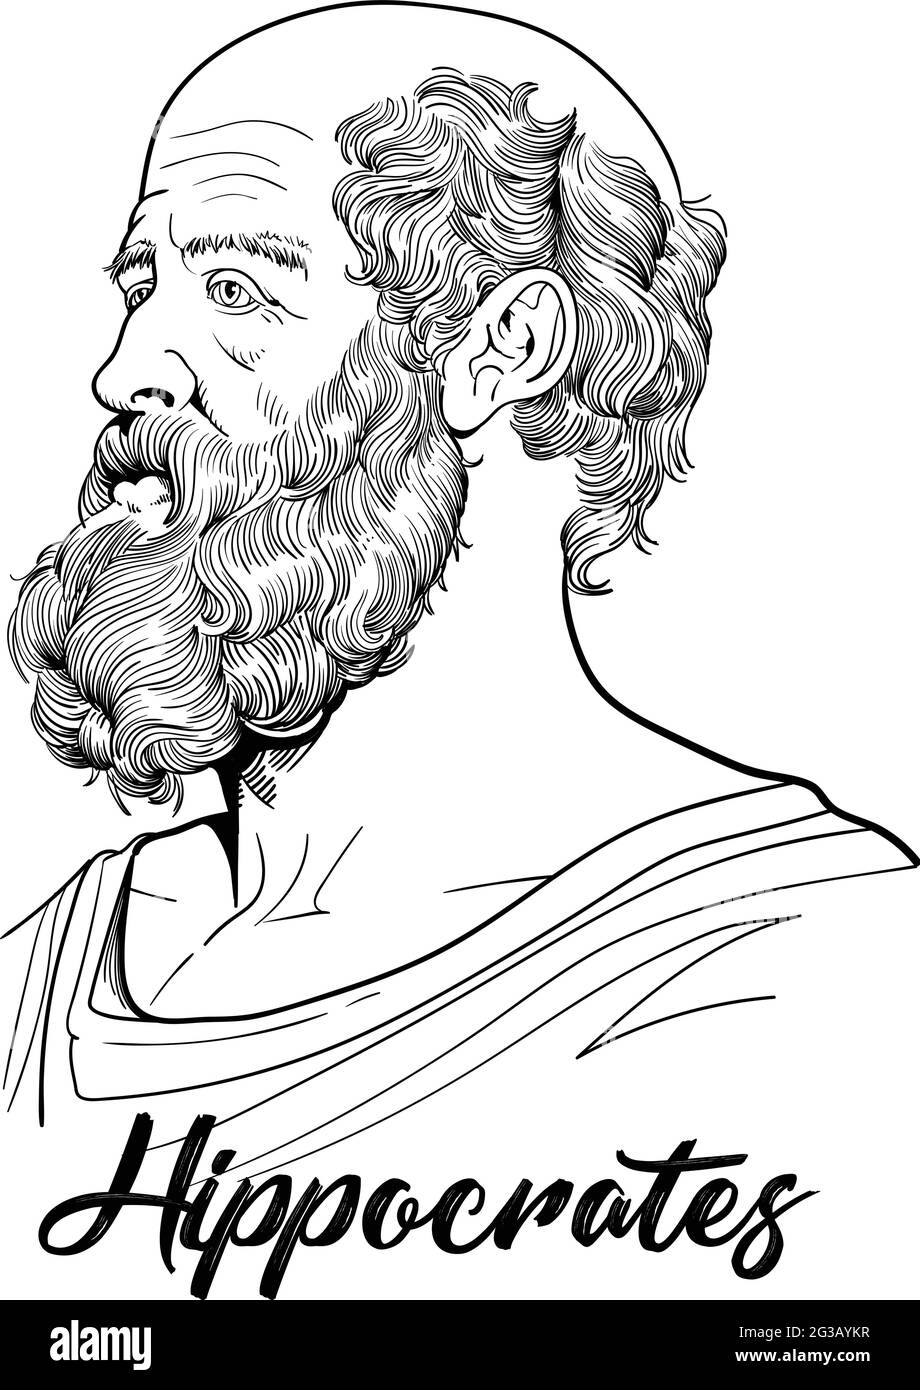 Hippocrates line art illustration Stock Vector